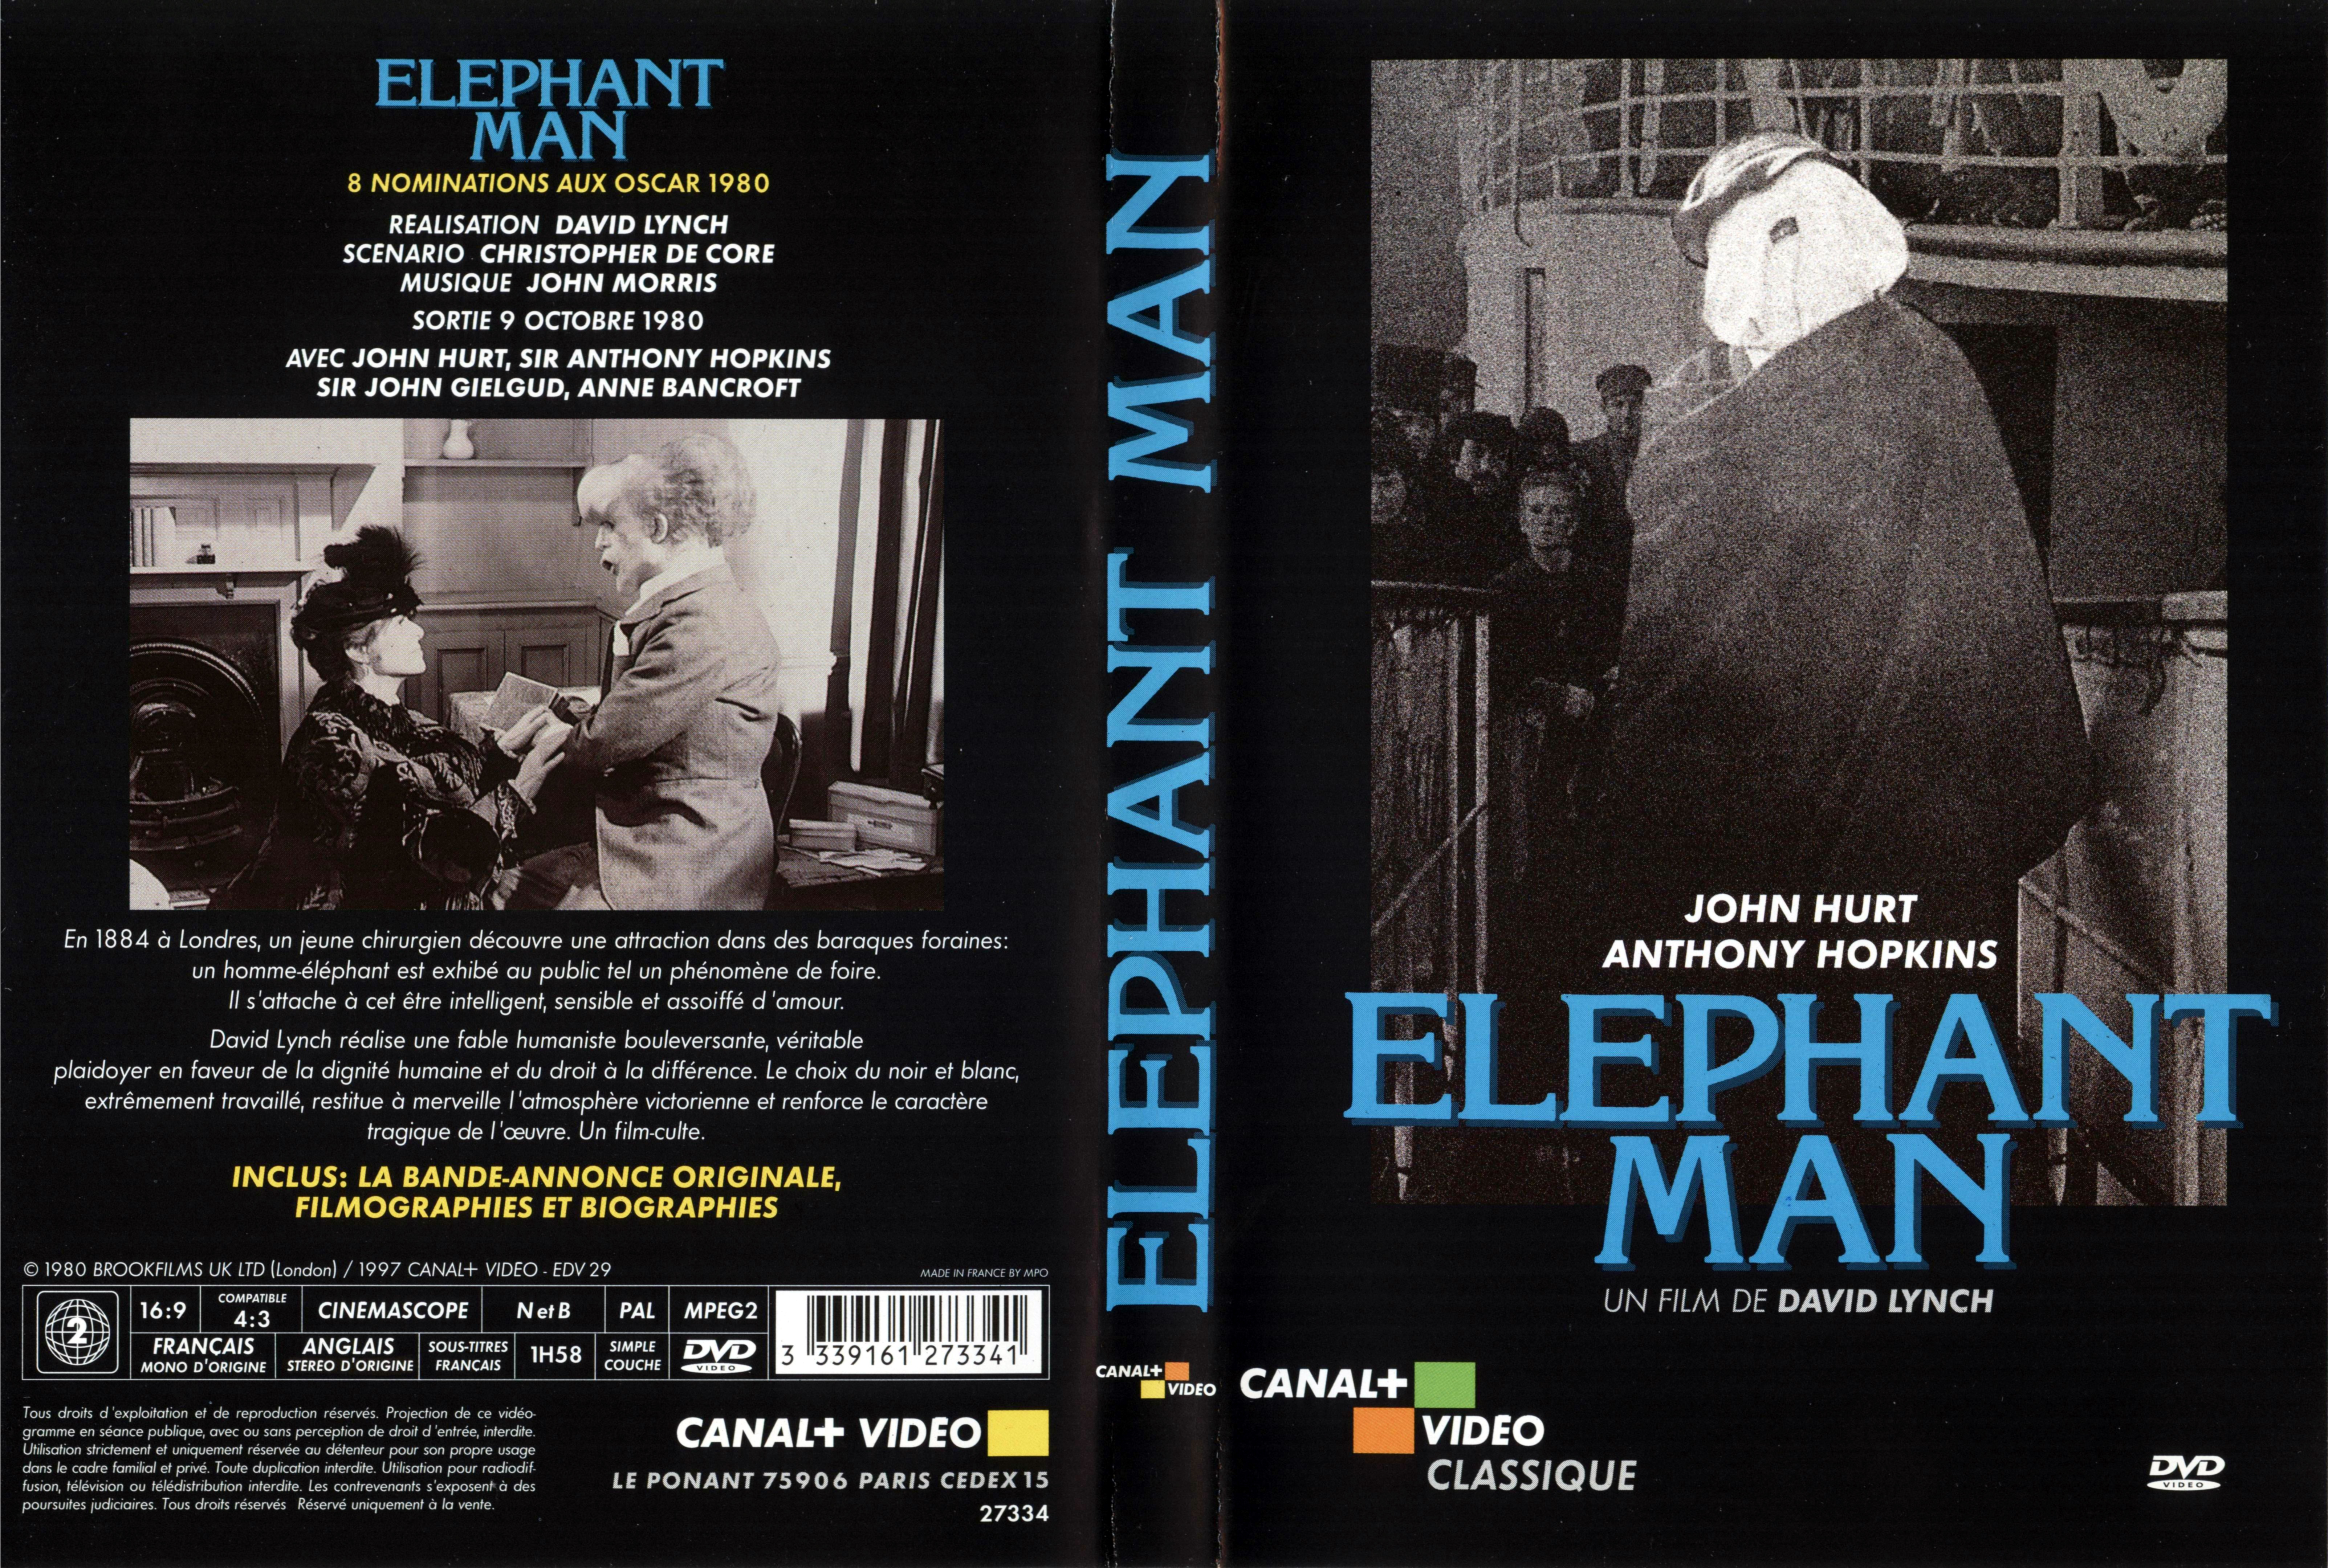 Jaquette DVD Elephant man v2